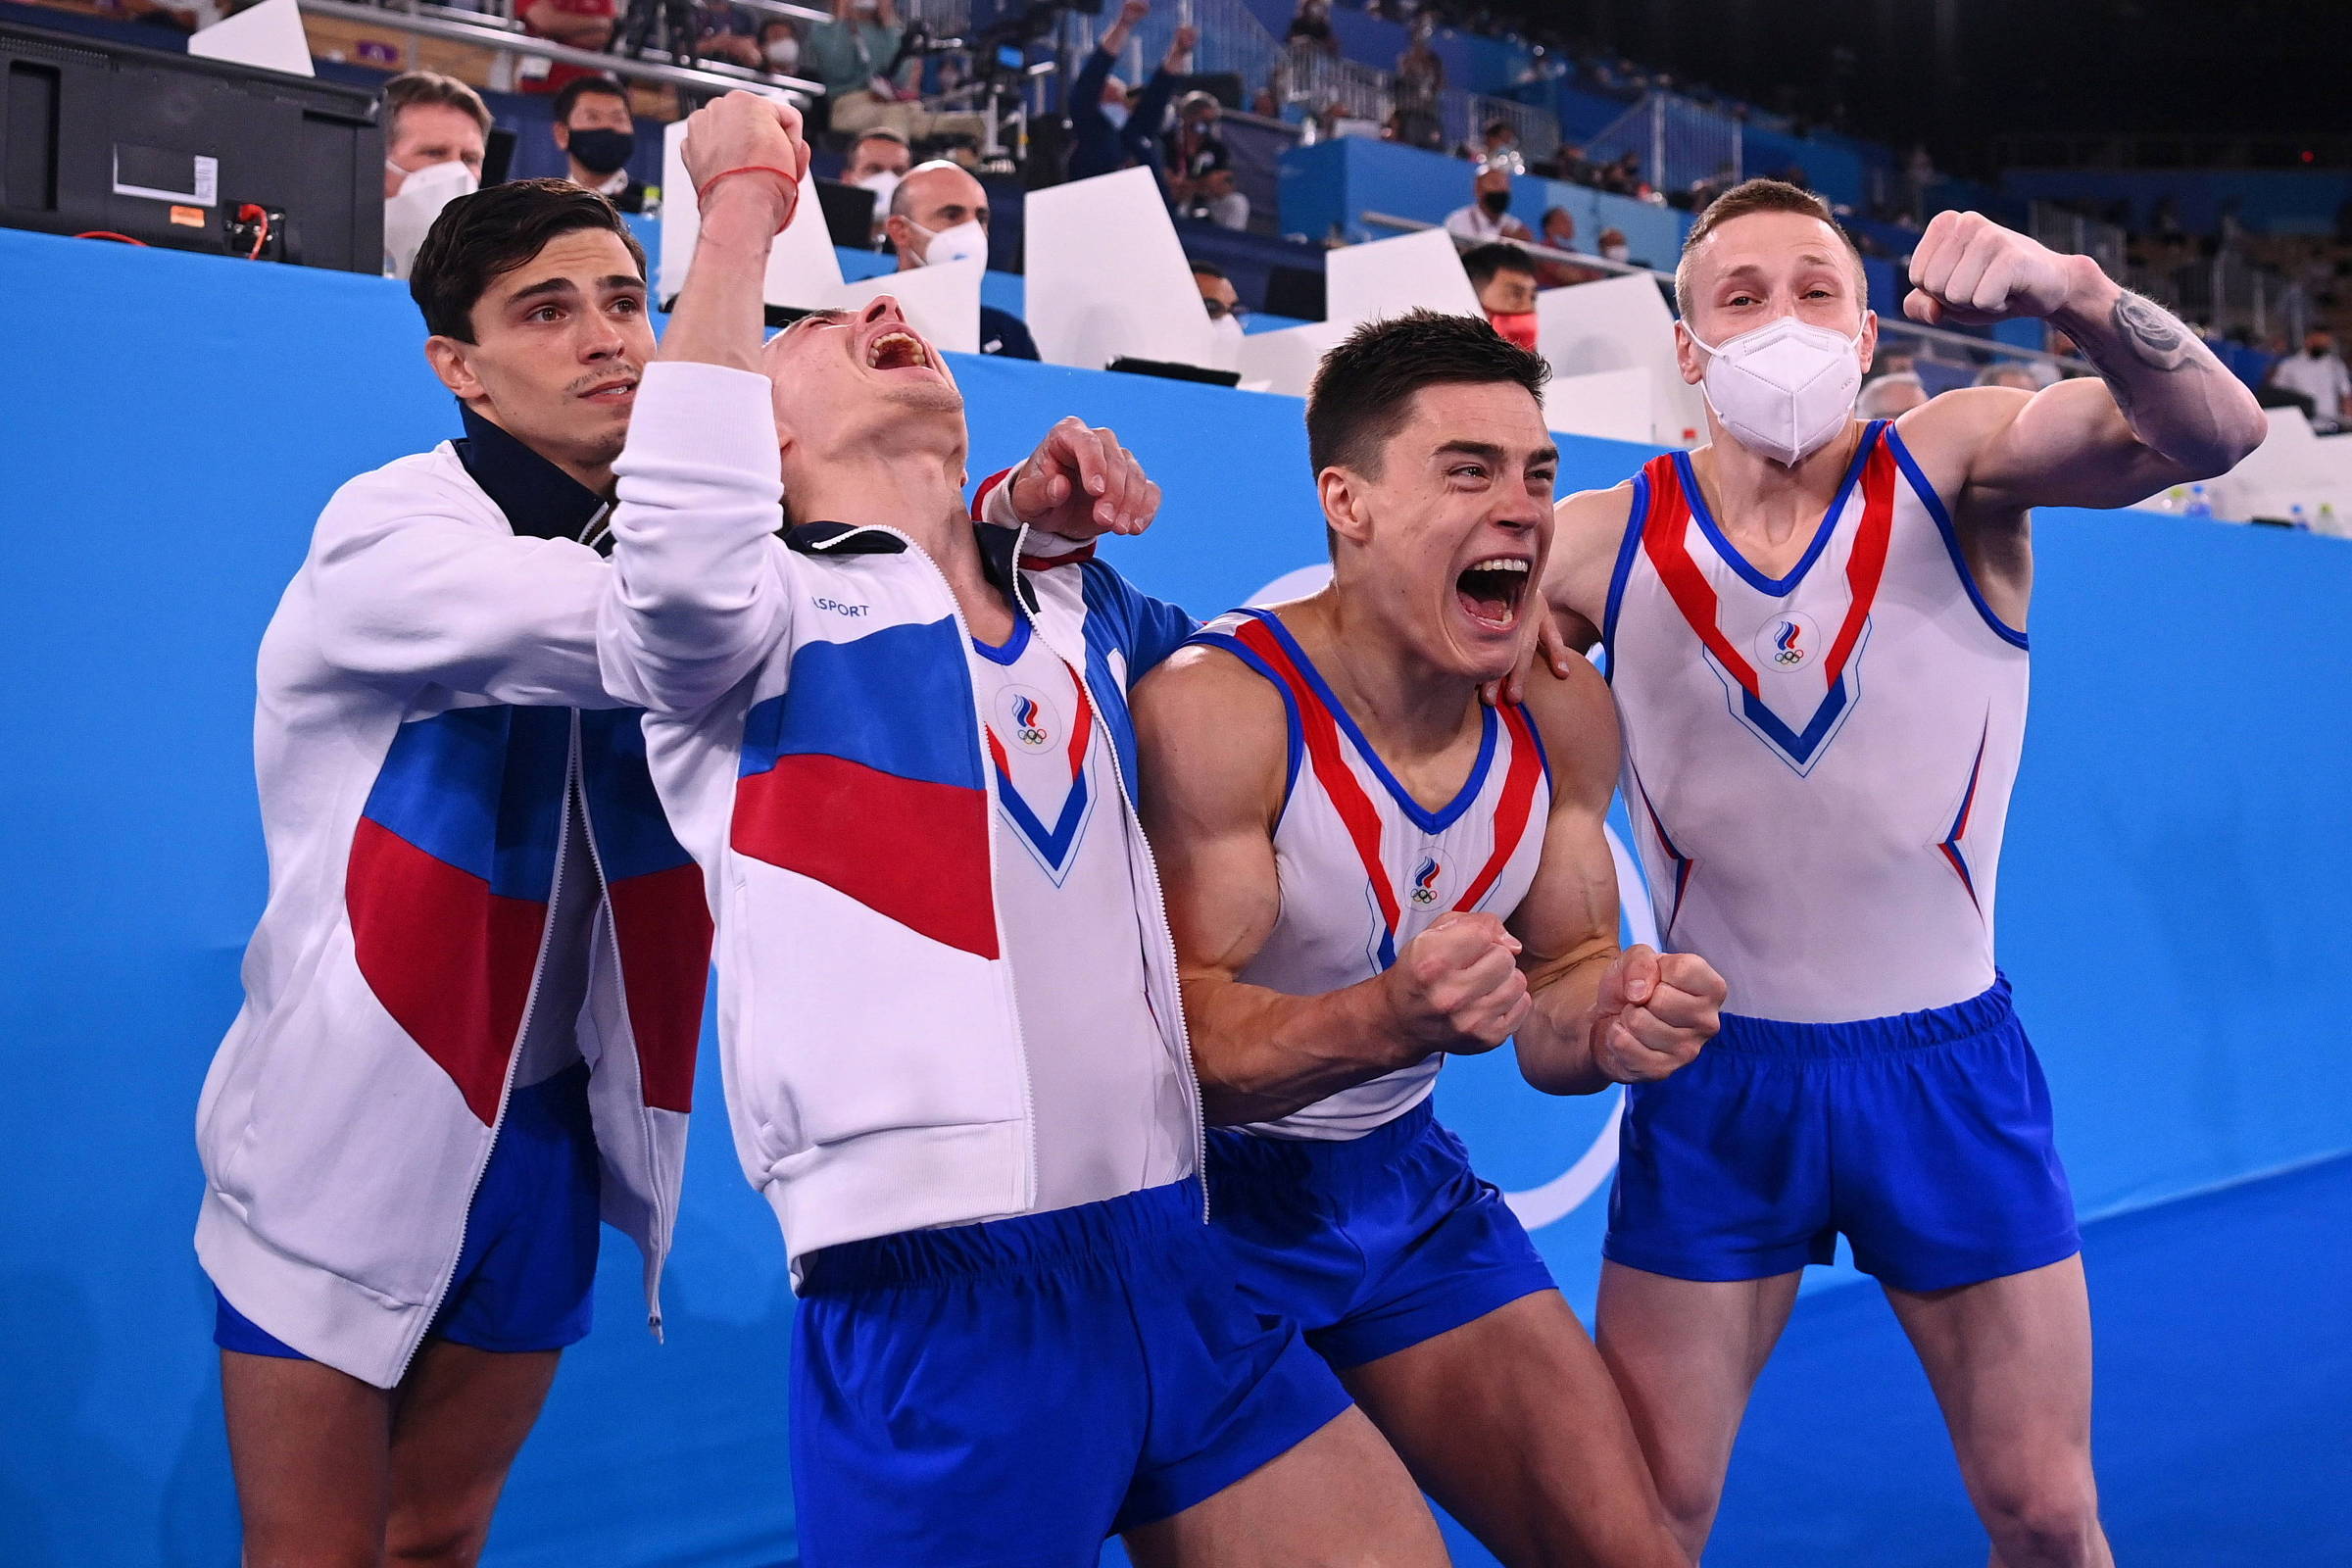 ROC nas Olimpíadas: entenda sigla para atletas da Rússia, olimpíadas